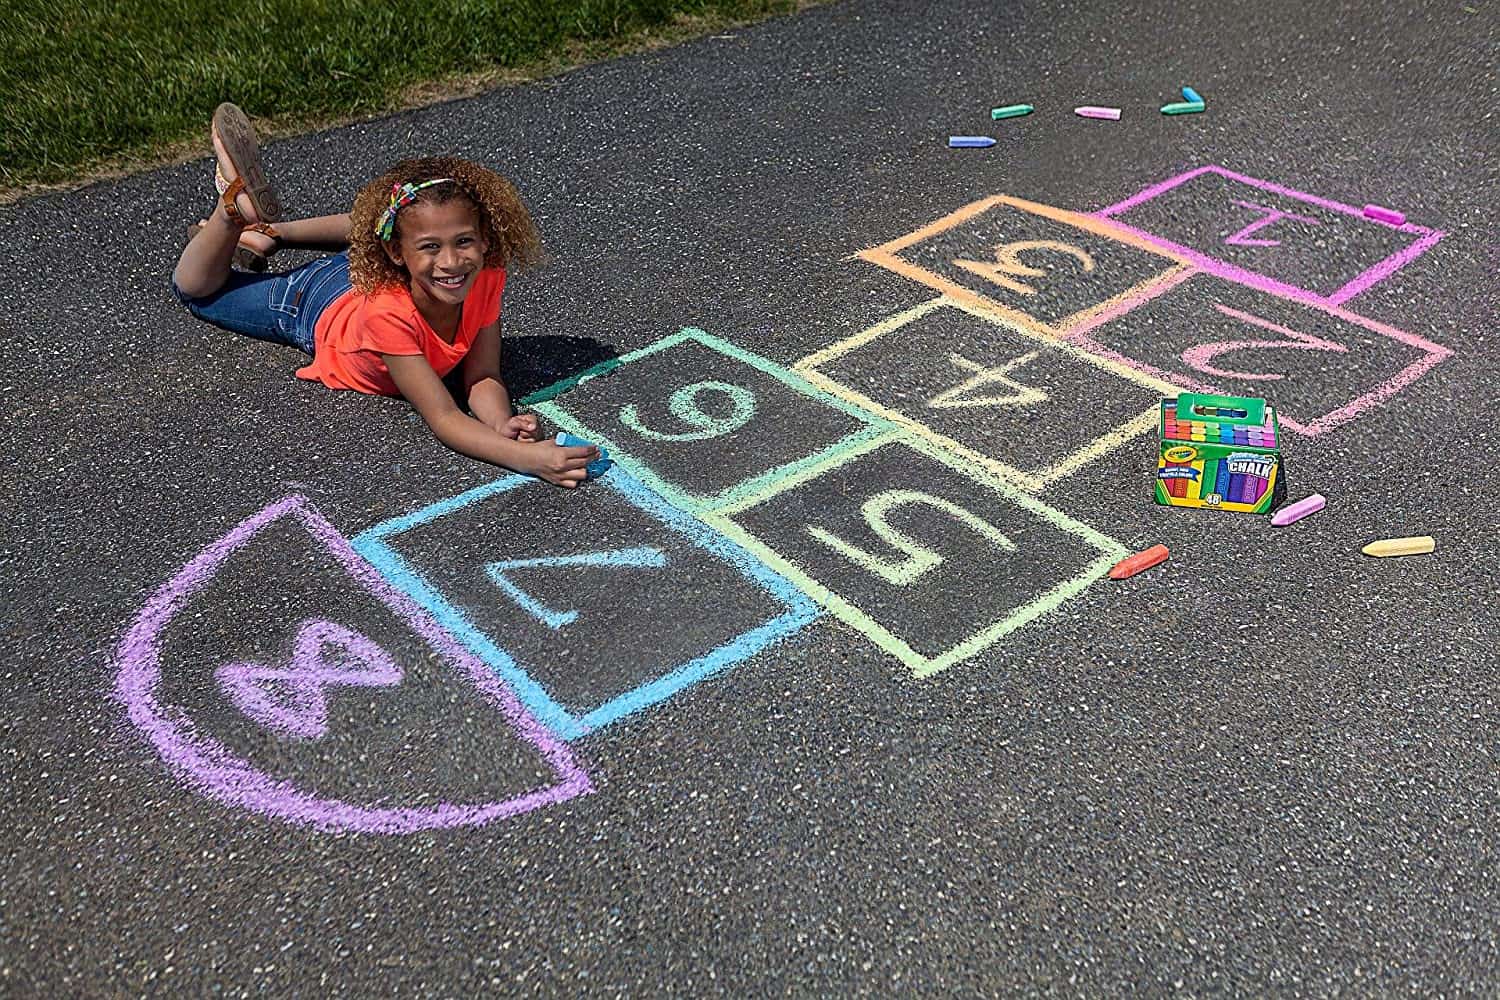 Crayola sidewalk chalk to make a hopscotch